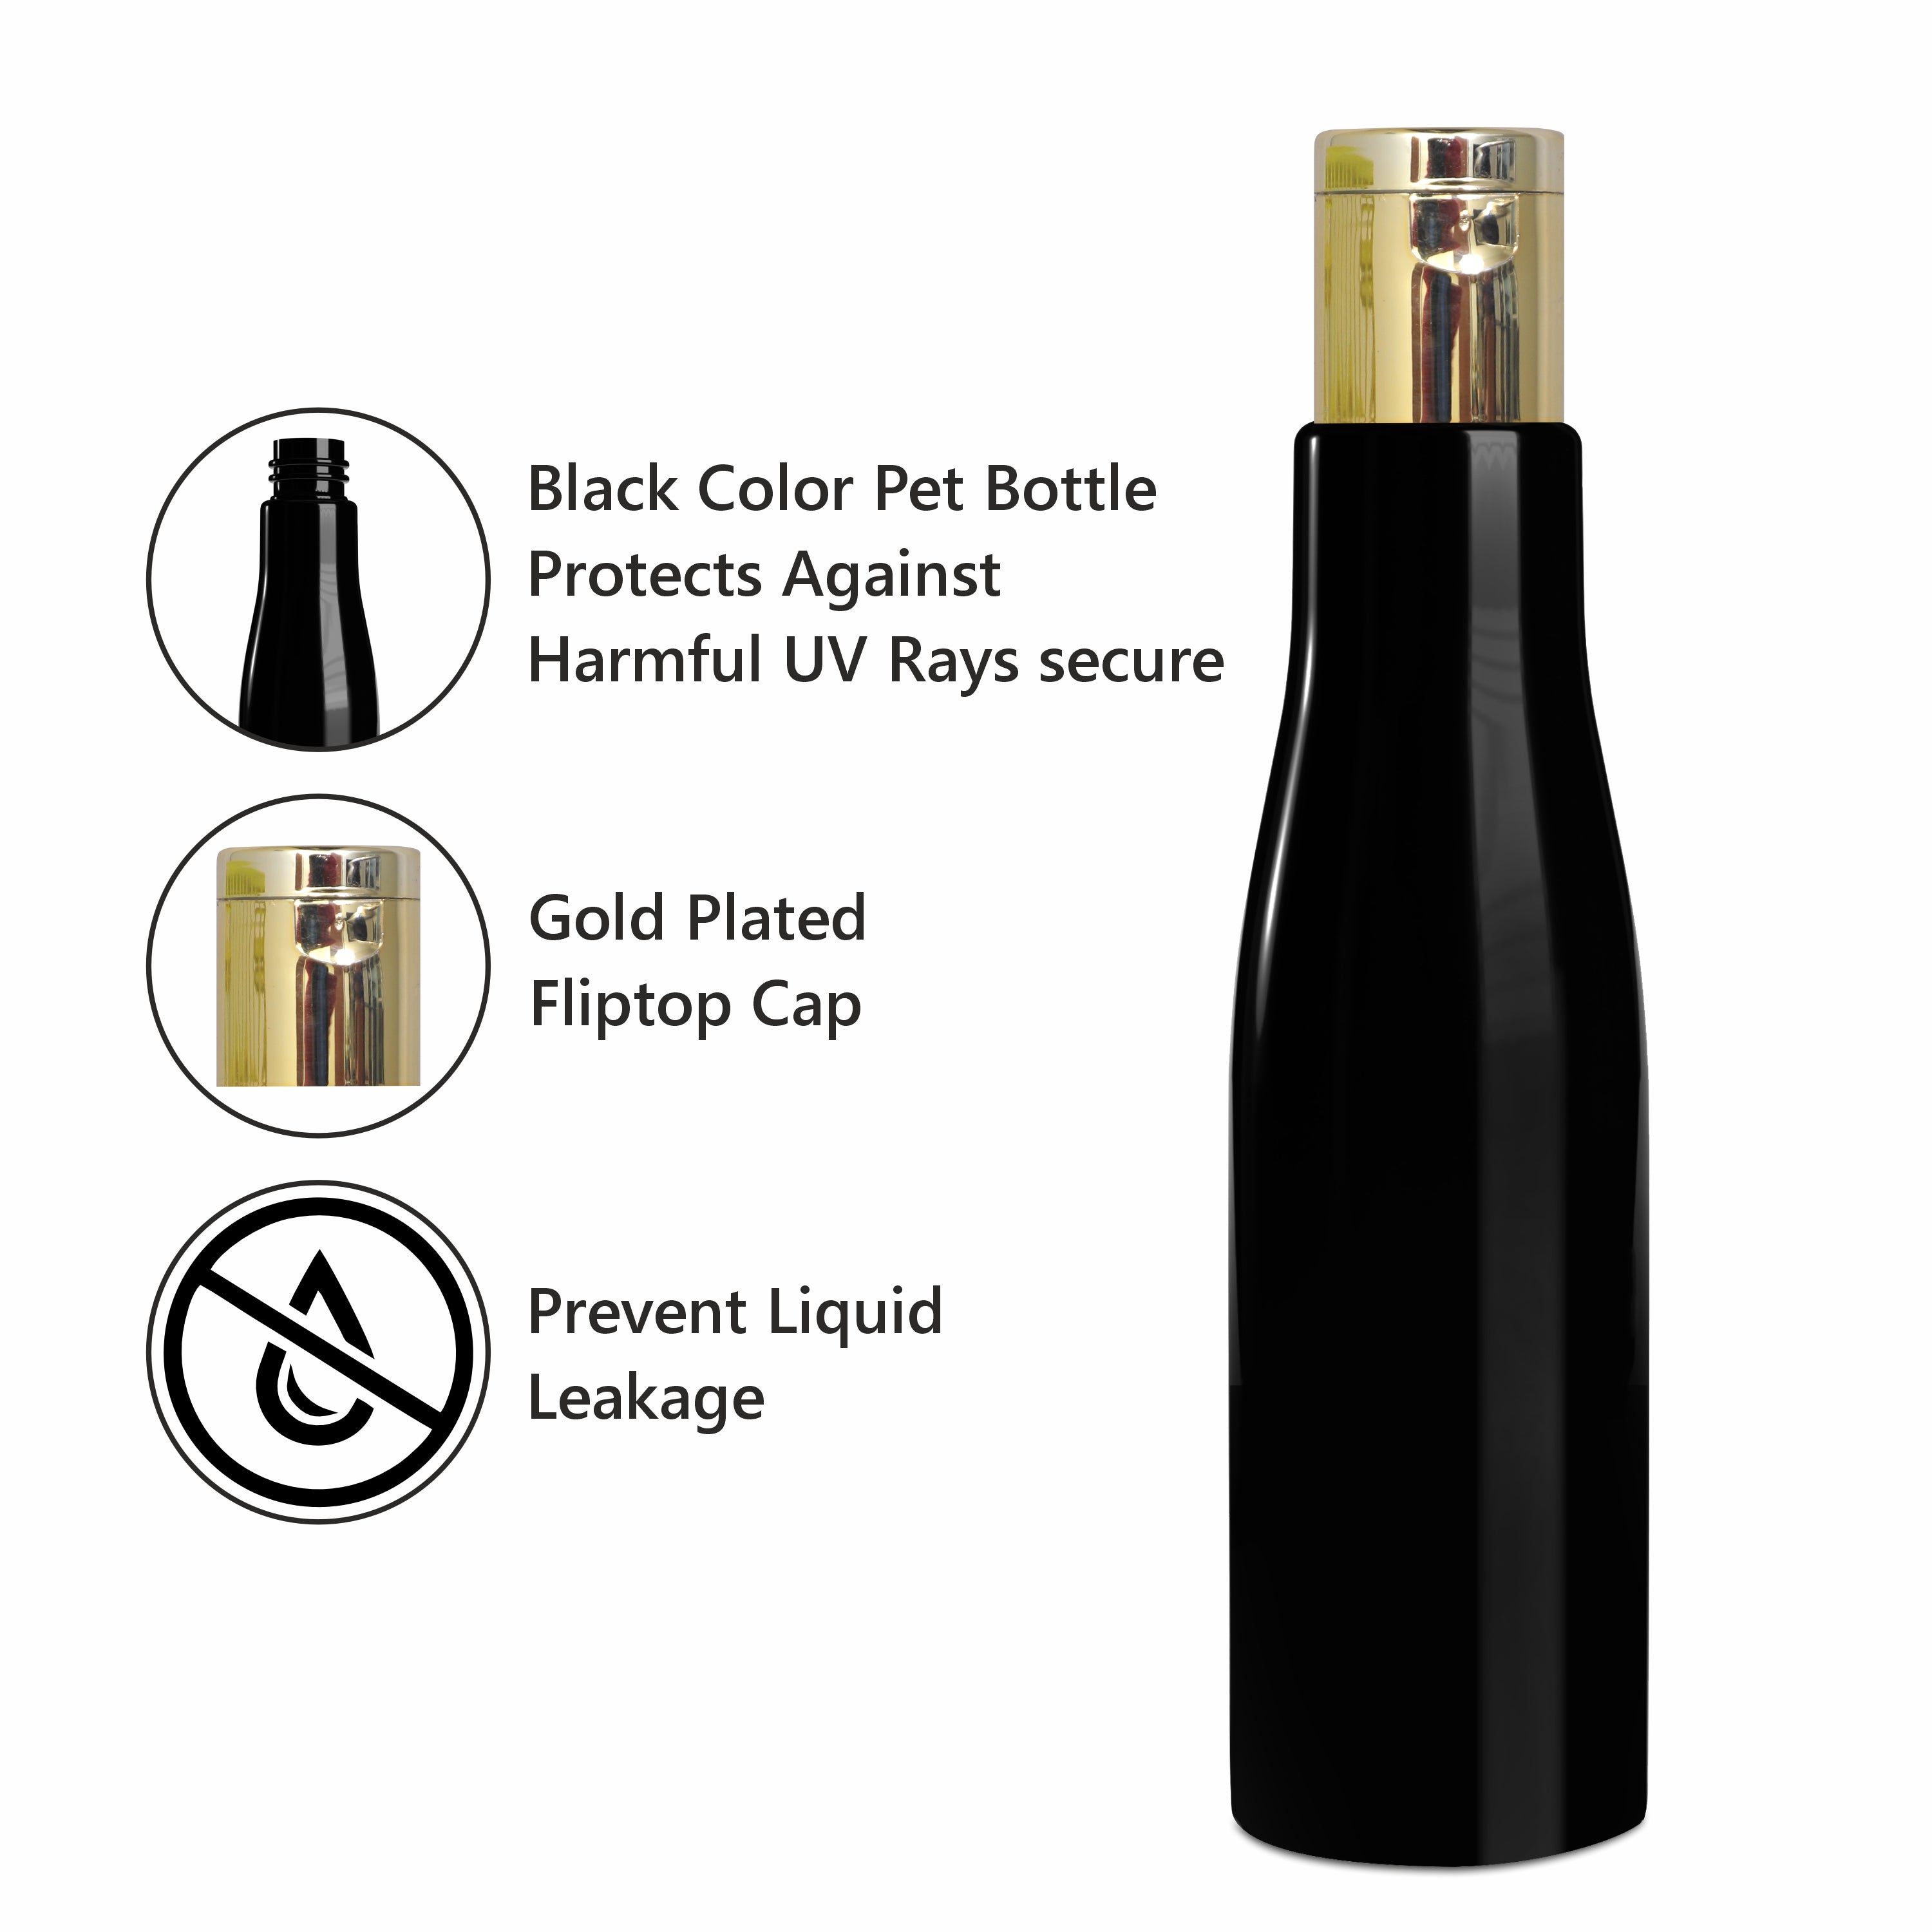 |ZMK27| Black Color Bottle With Gold  Disk Top Cap-200ml